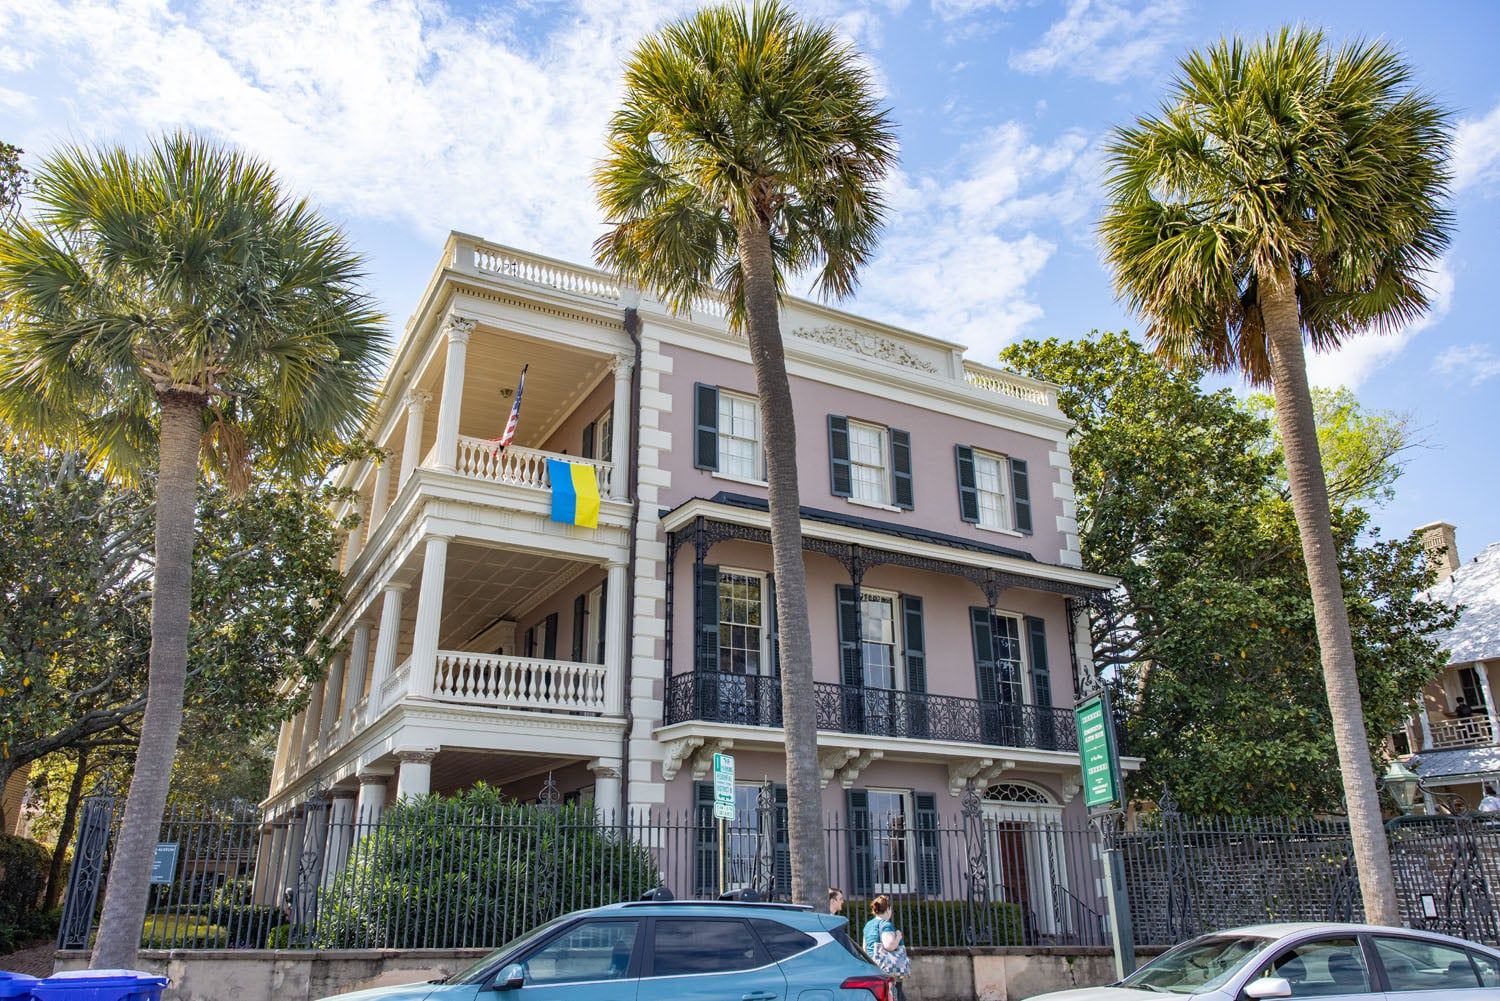 Edmonston-Alston House | Best Things to Do in Charleston